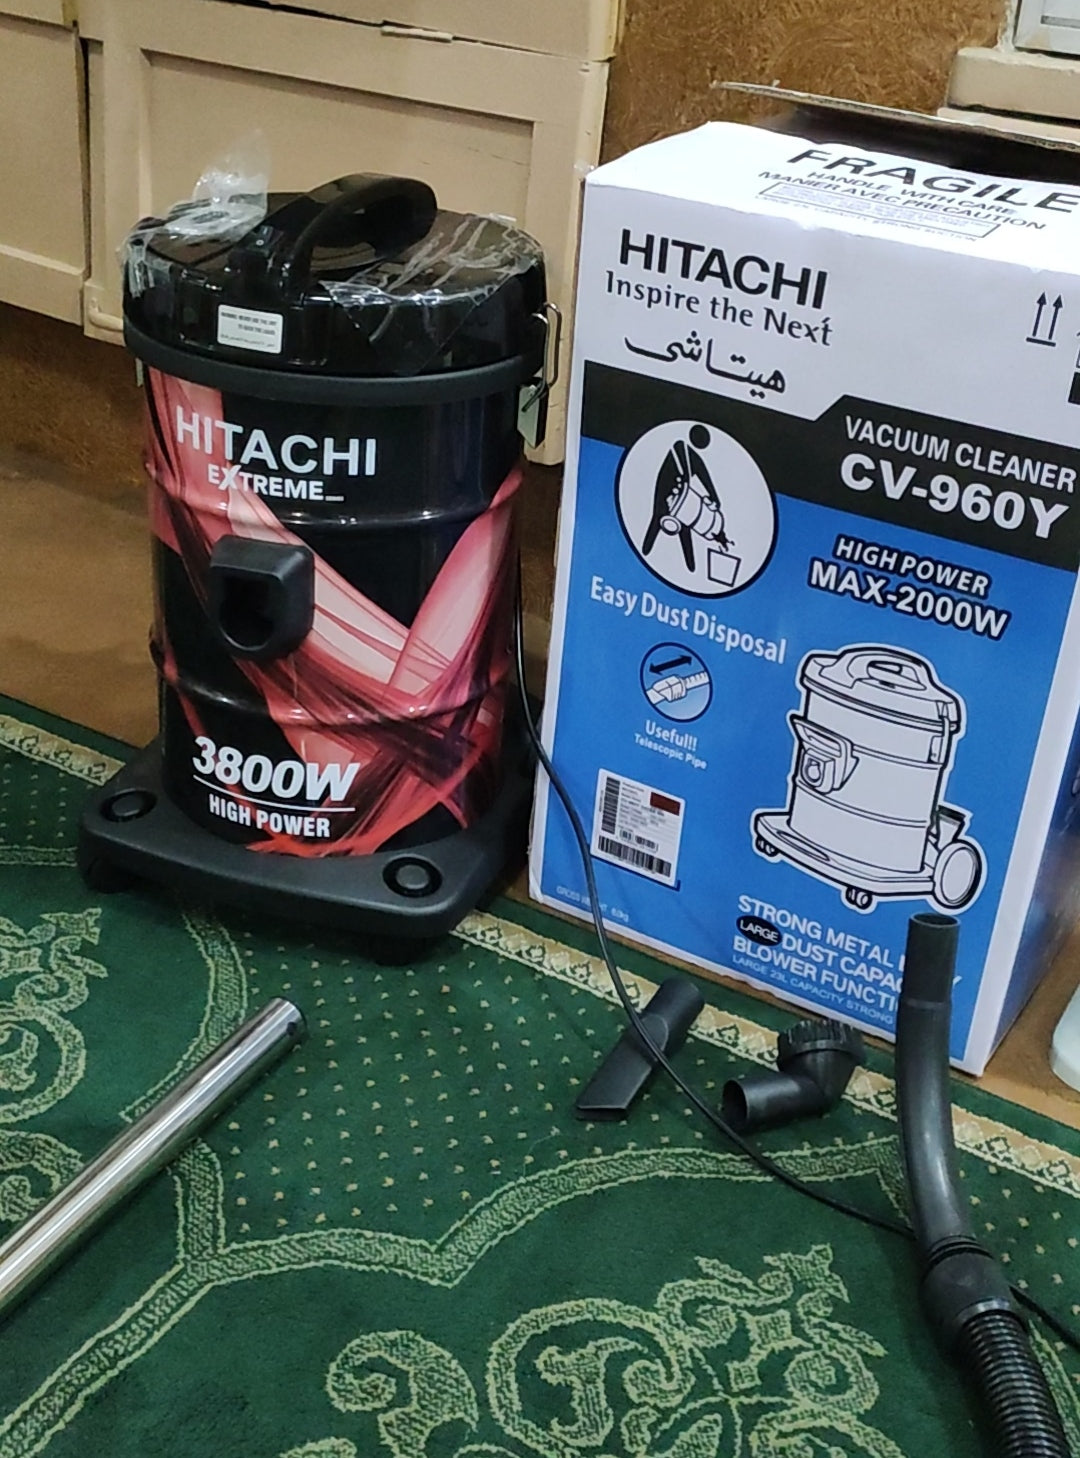 Hitachi 25 Liter Vacuum Cleaner Heavy Dust Sweeping Robot, Hoover